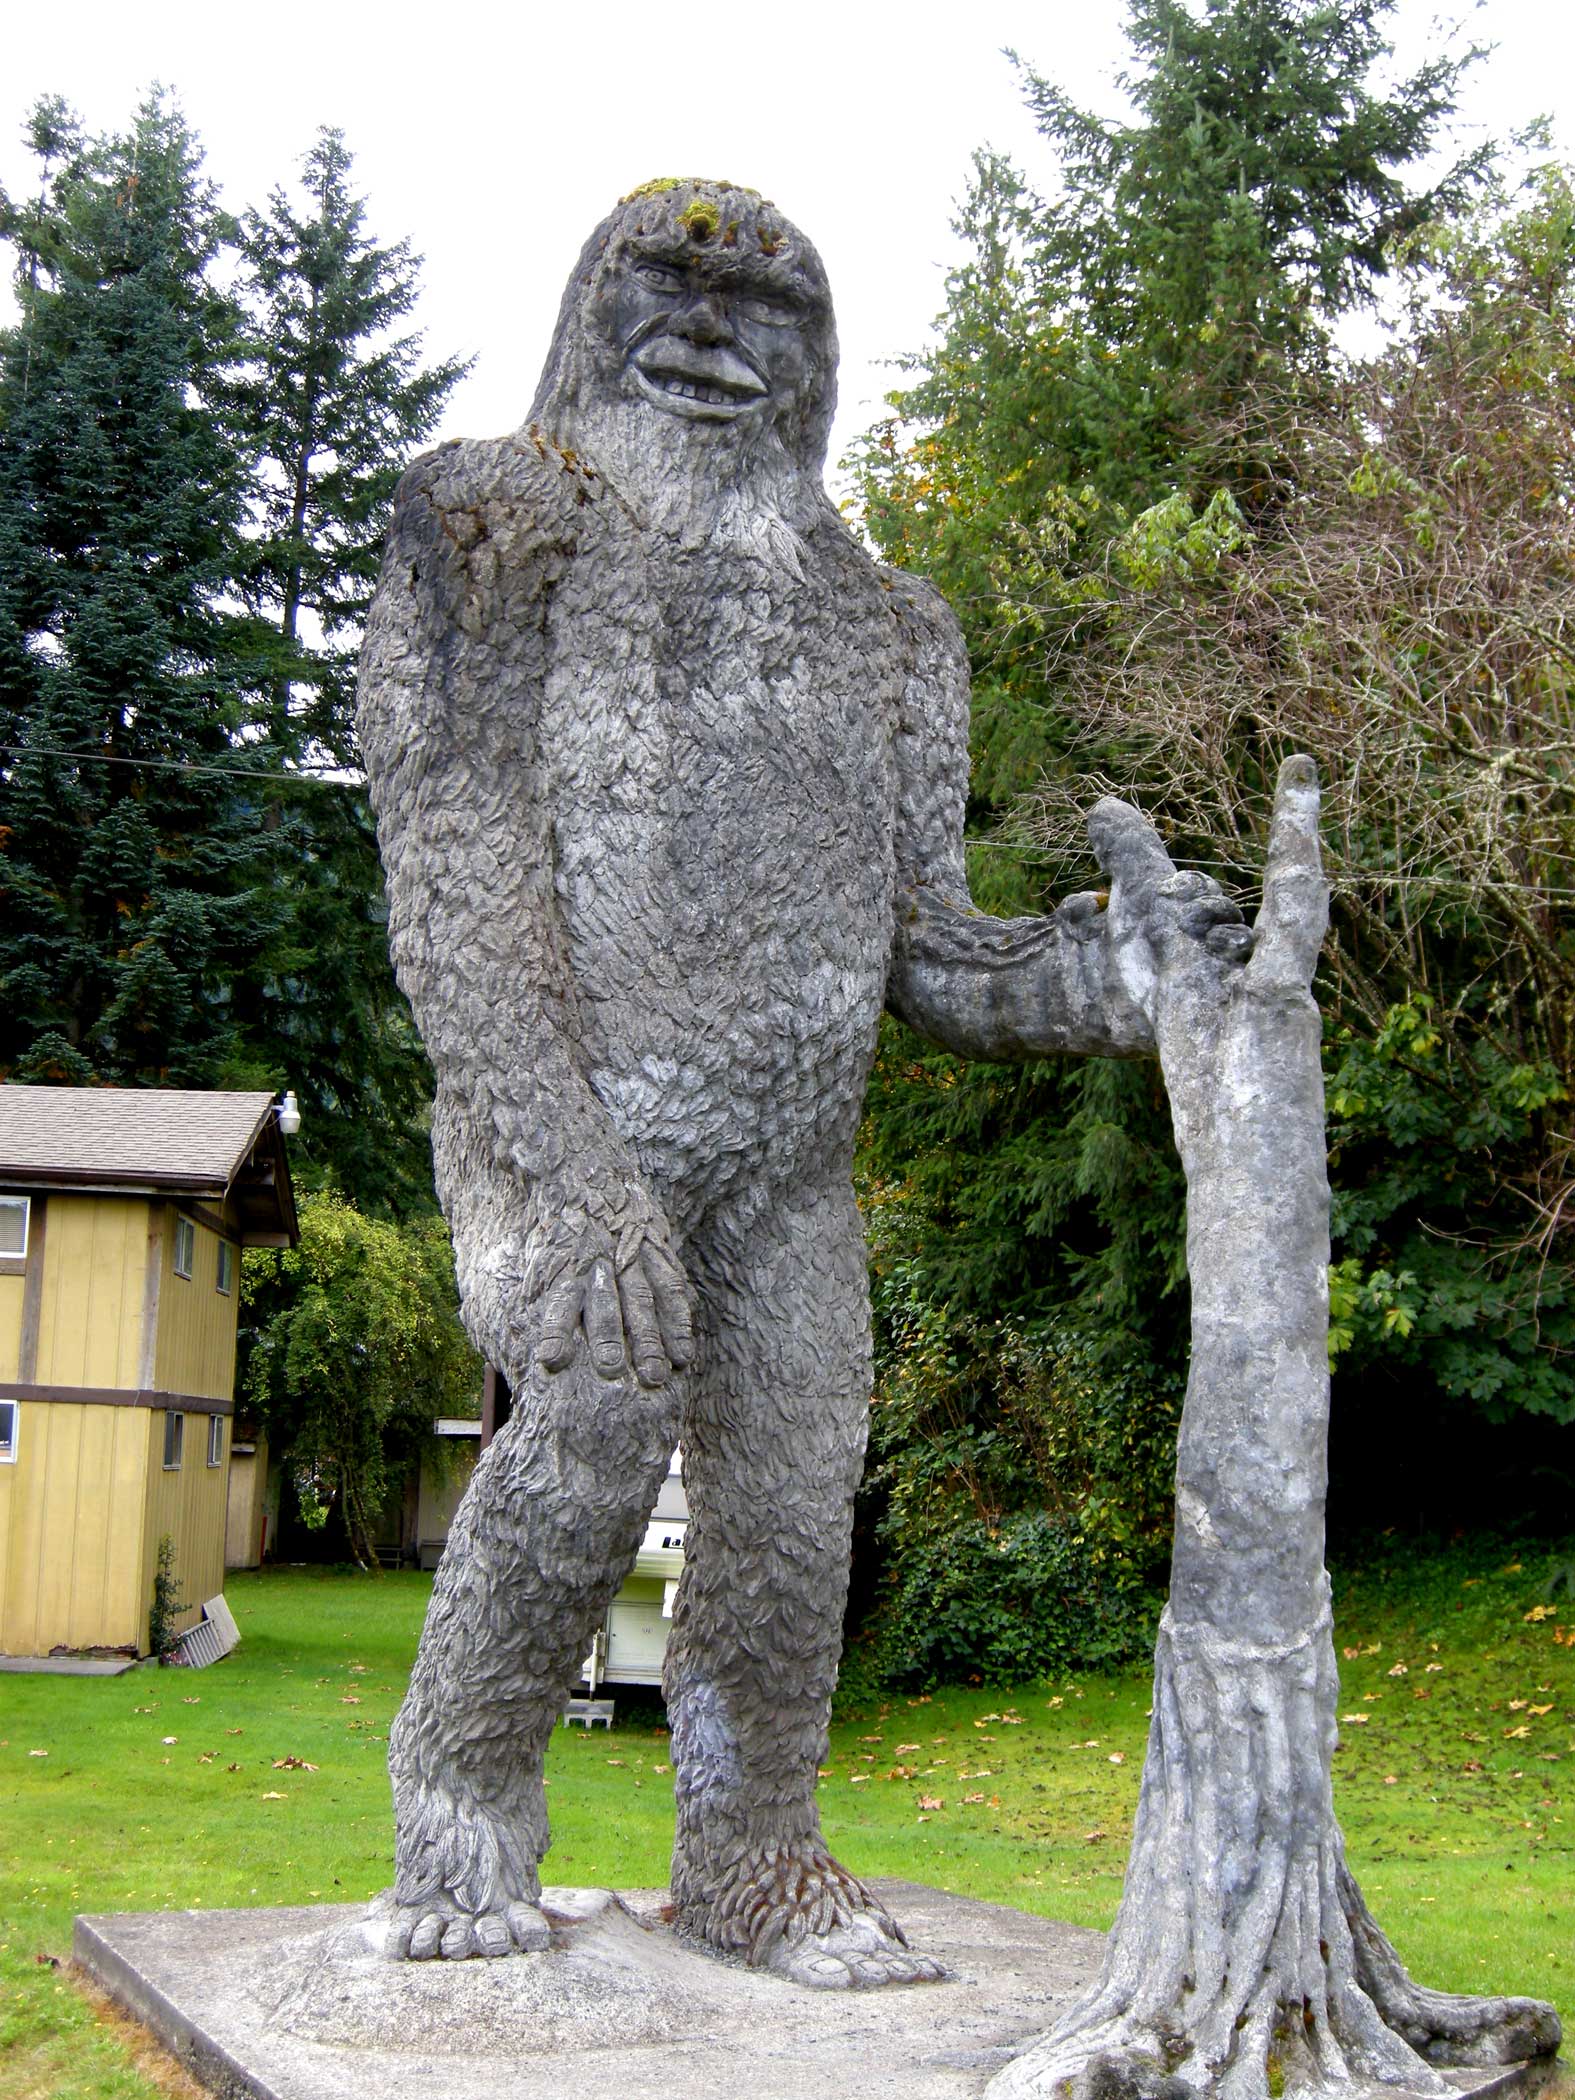 Folk carving of Bigfoot near Silver Lake, WA. https://commons.wikimedia.org/wiki/Category:Bigfoot#/media/File:BigfootStatue-SilverLakeWA.jpg